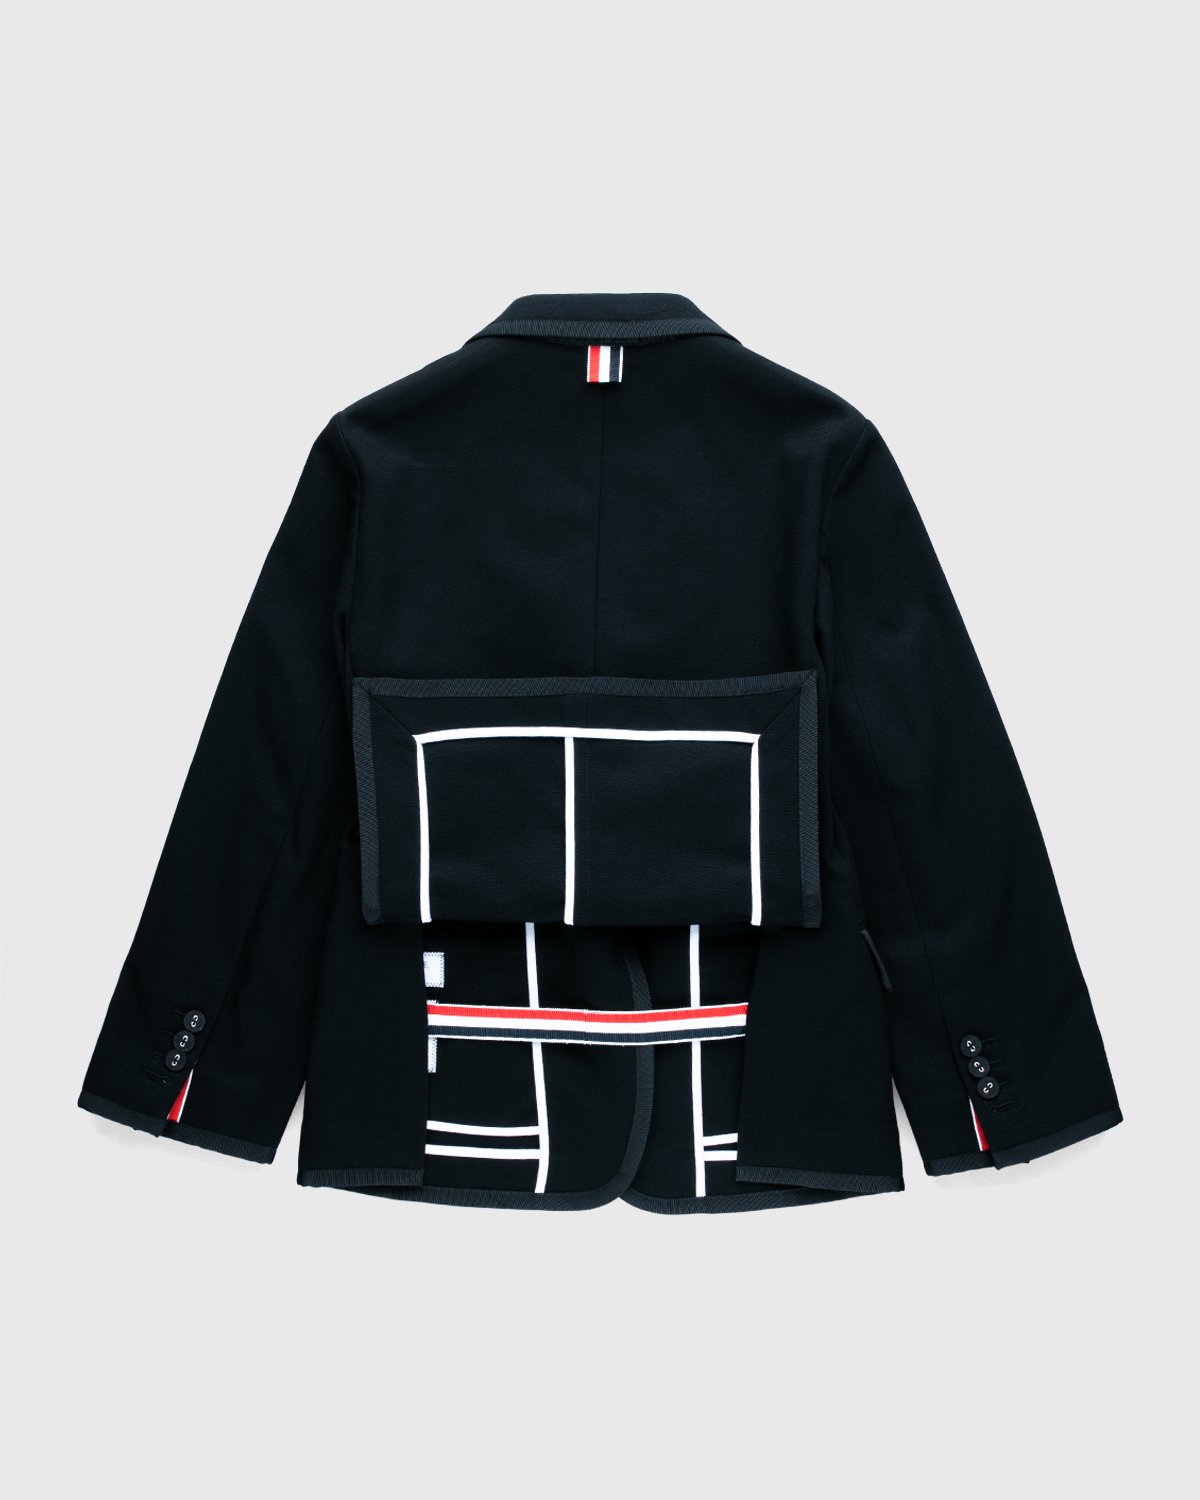 Thom Browne x Highsnobiety - Men Deconstructed Sport Jacket Black - Clothing - Black - Image 3